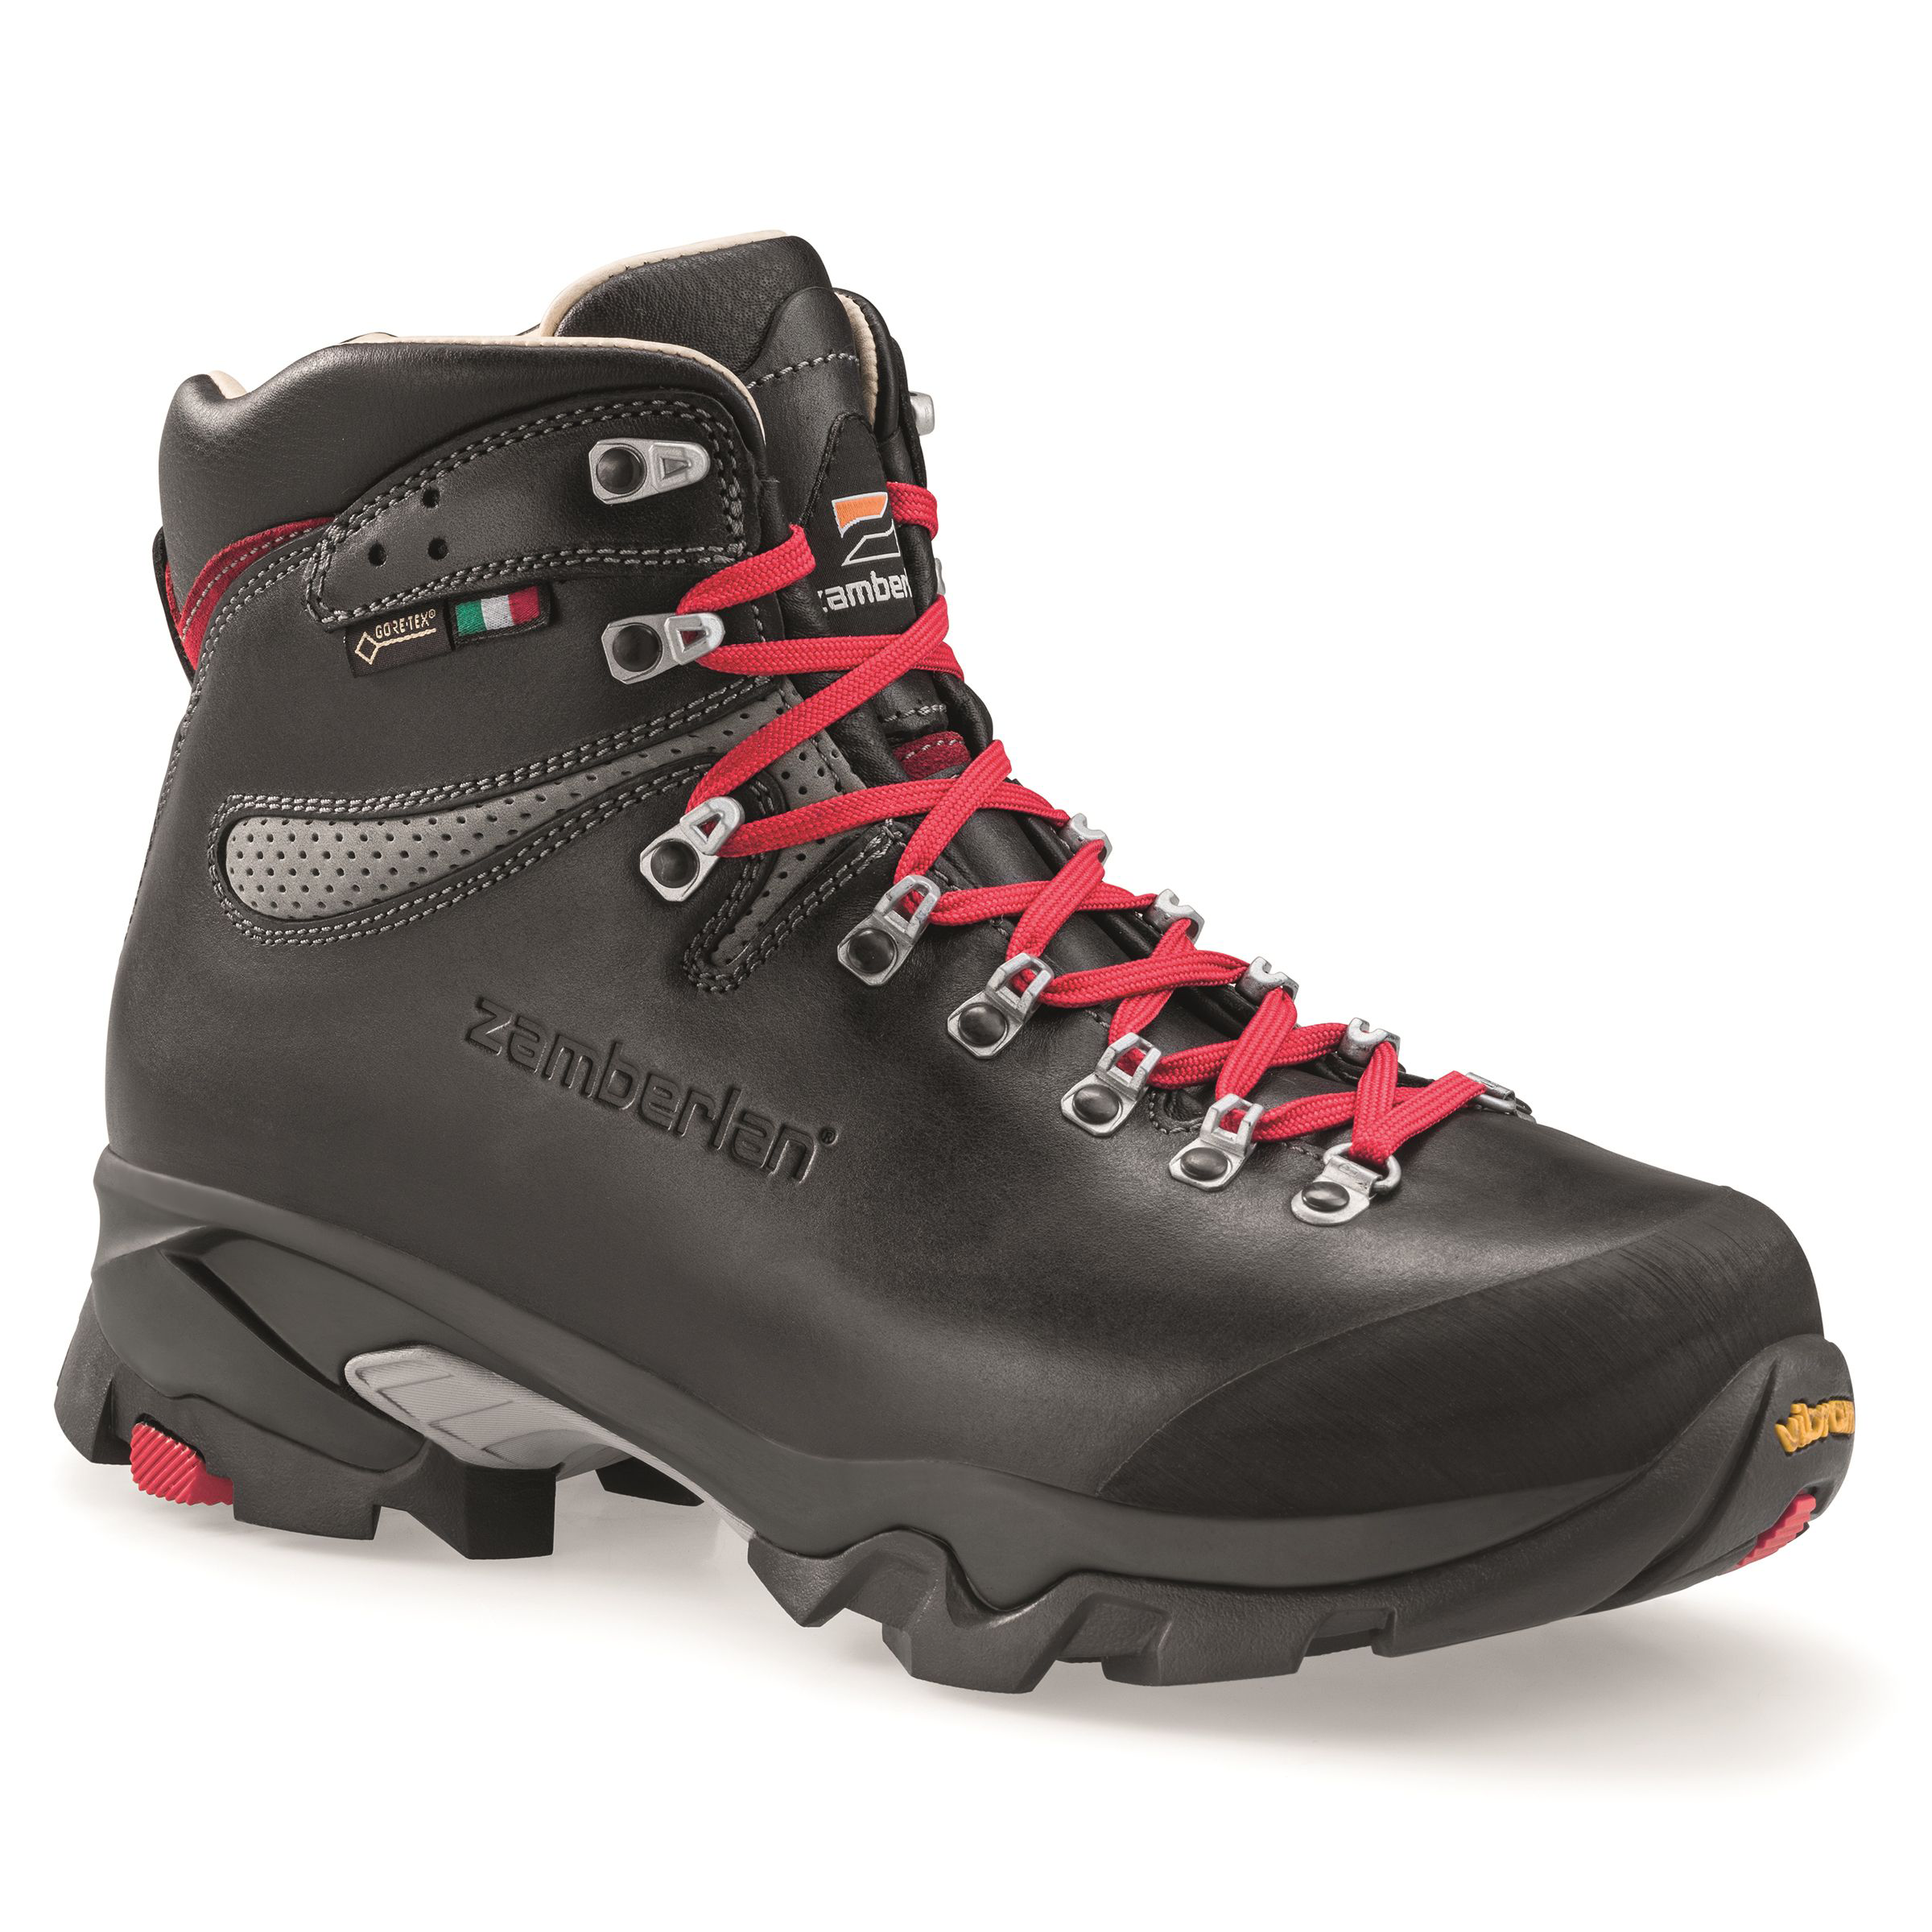 Zamberlan 1996 Vioz Lux GTX RR Waterproof Hiking Boots for Men - Waxed Black - 13M